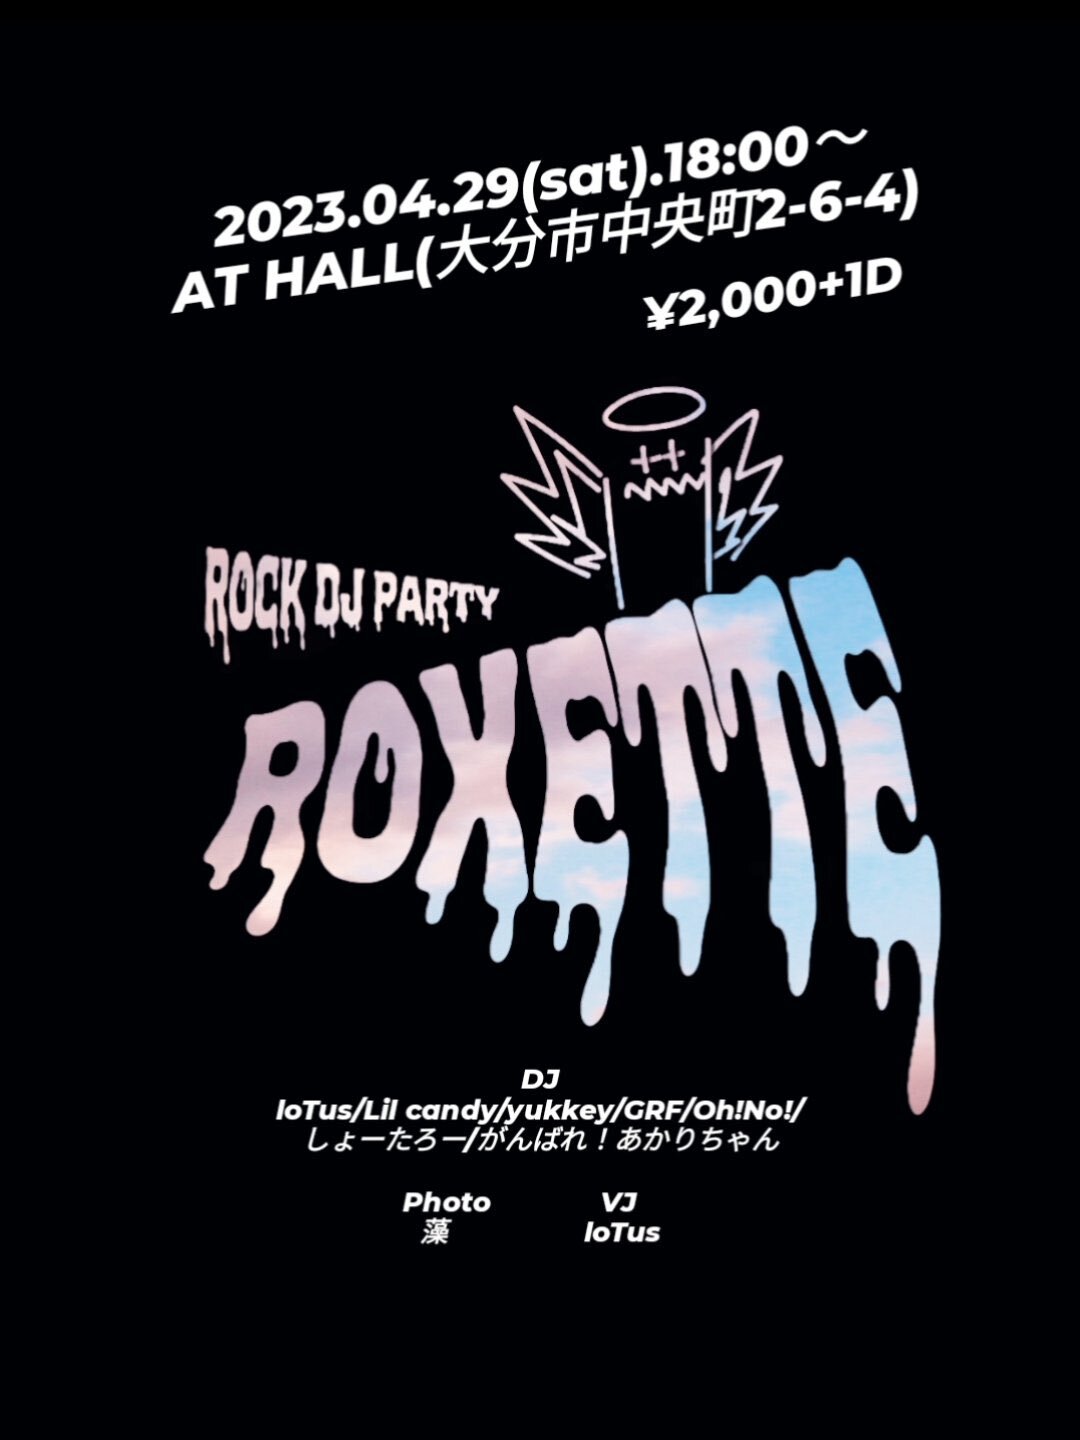 ROCK DJ PARTY " ROXETTE "